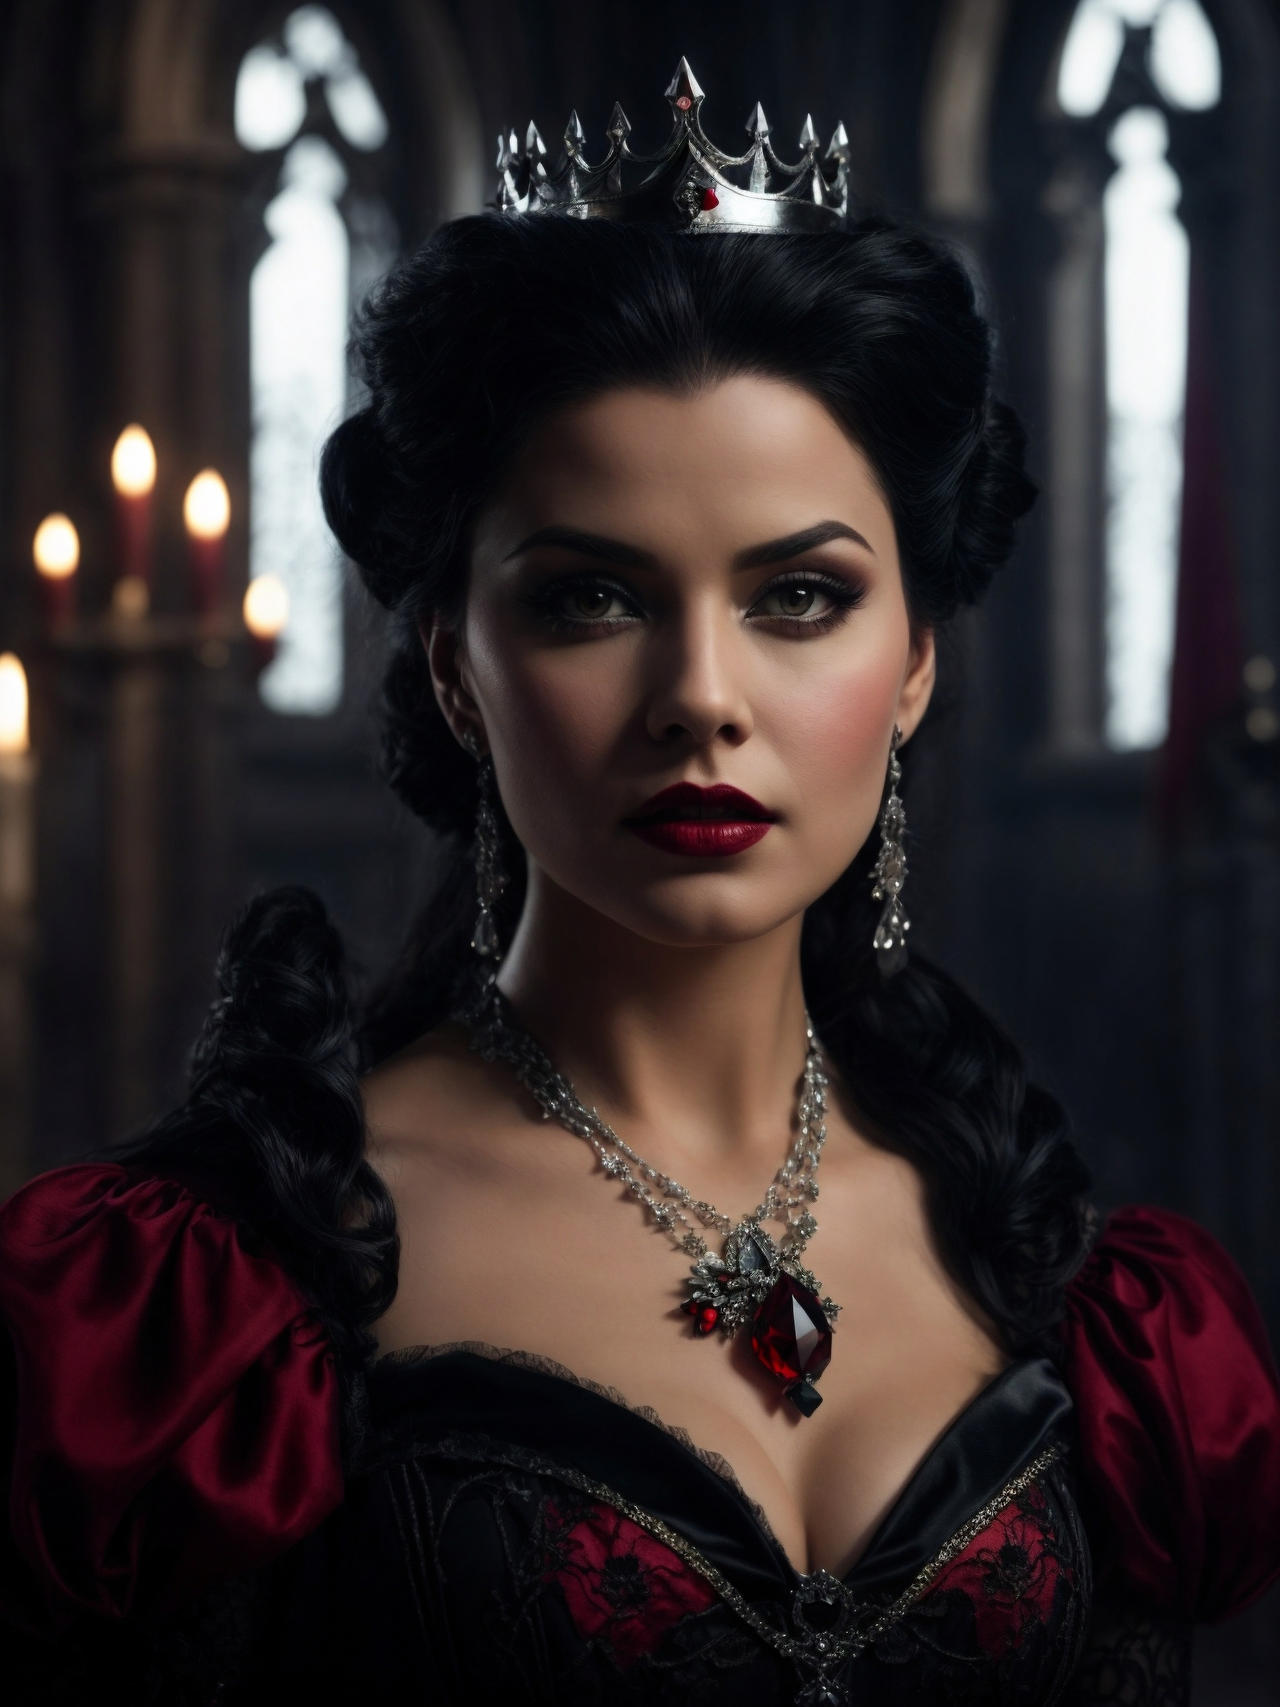 Regina the Evil Queen by Kellyainsley on DeviantArt